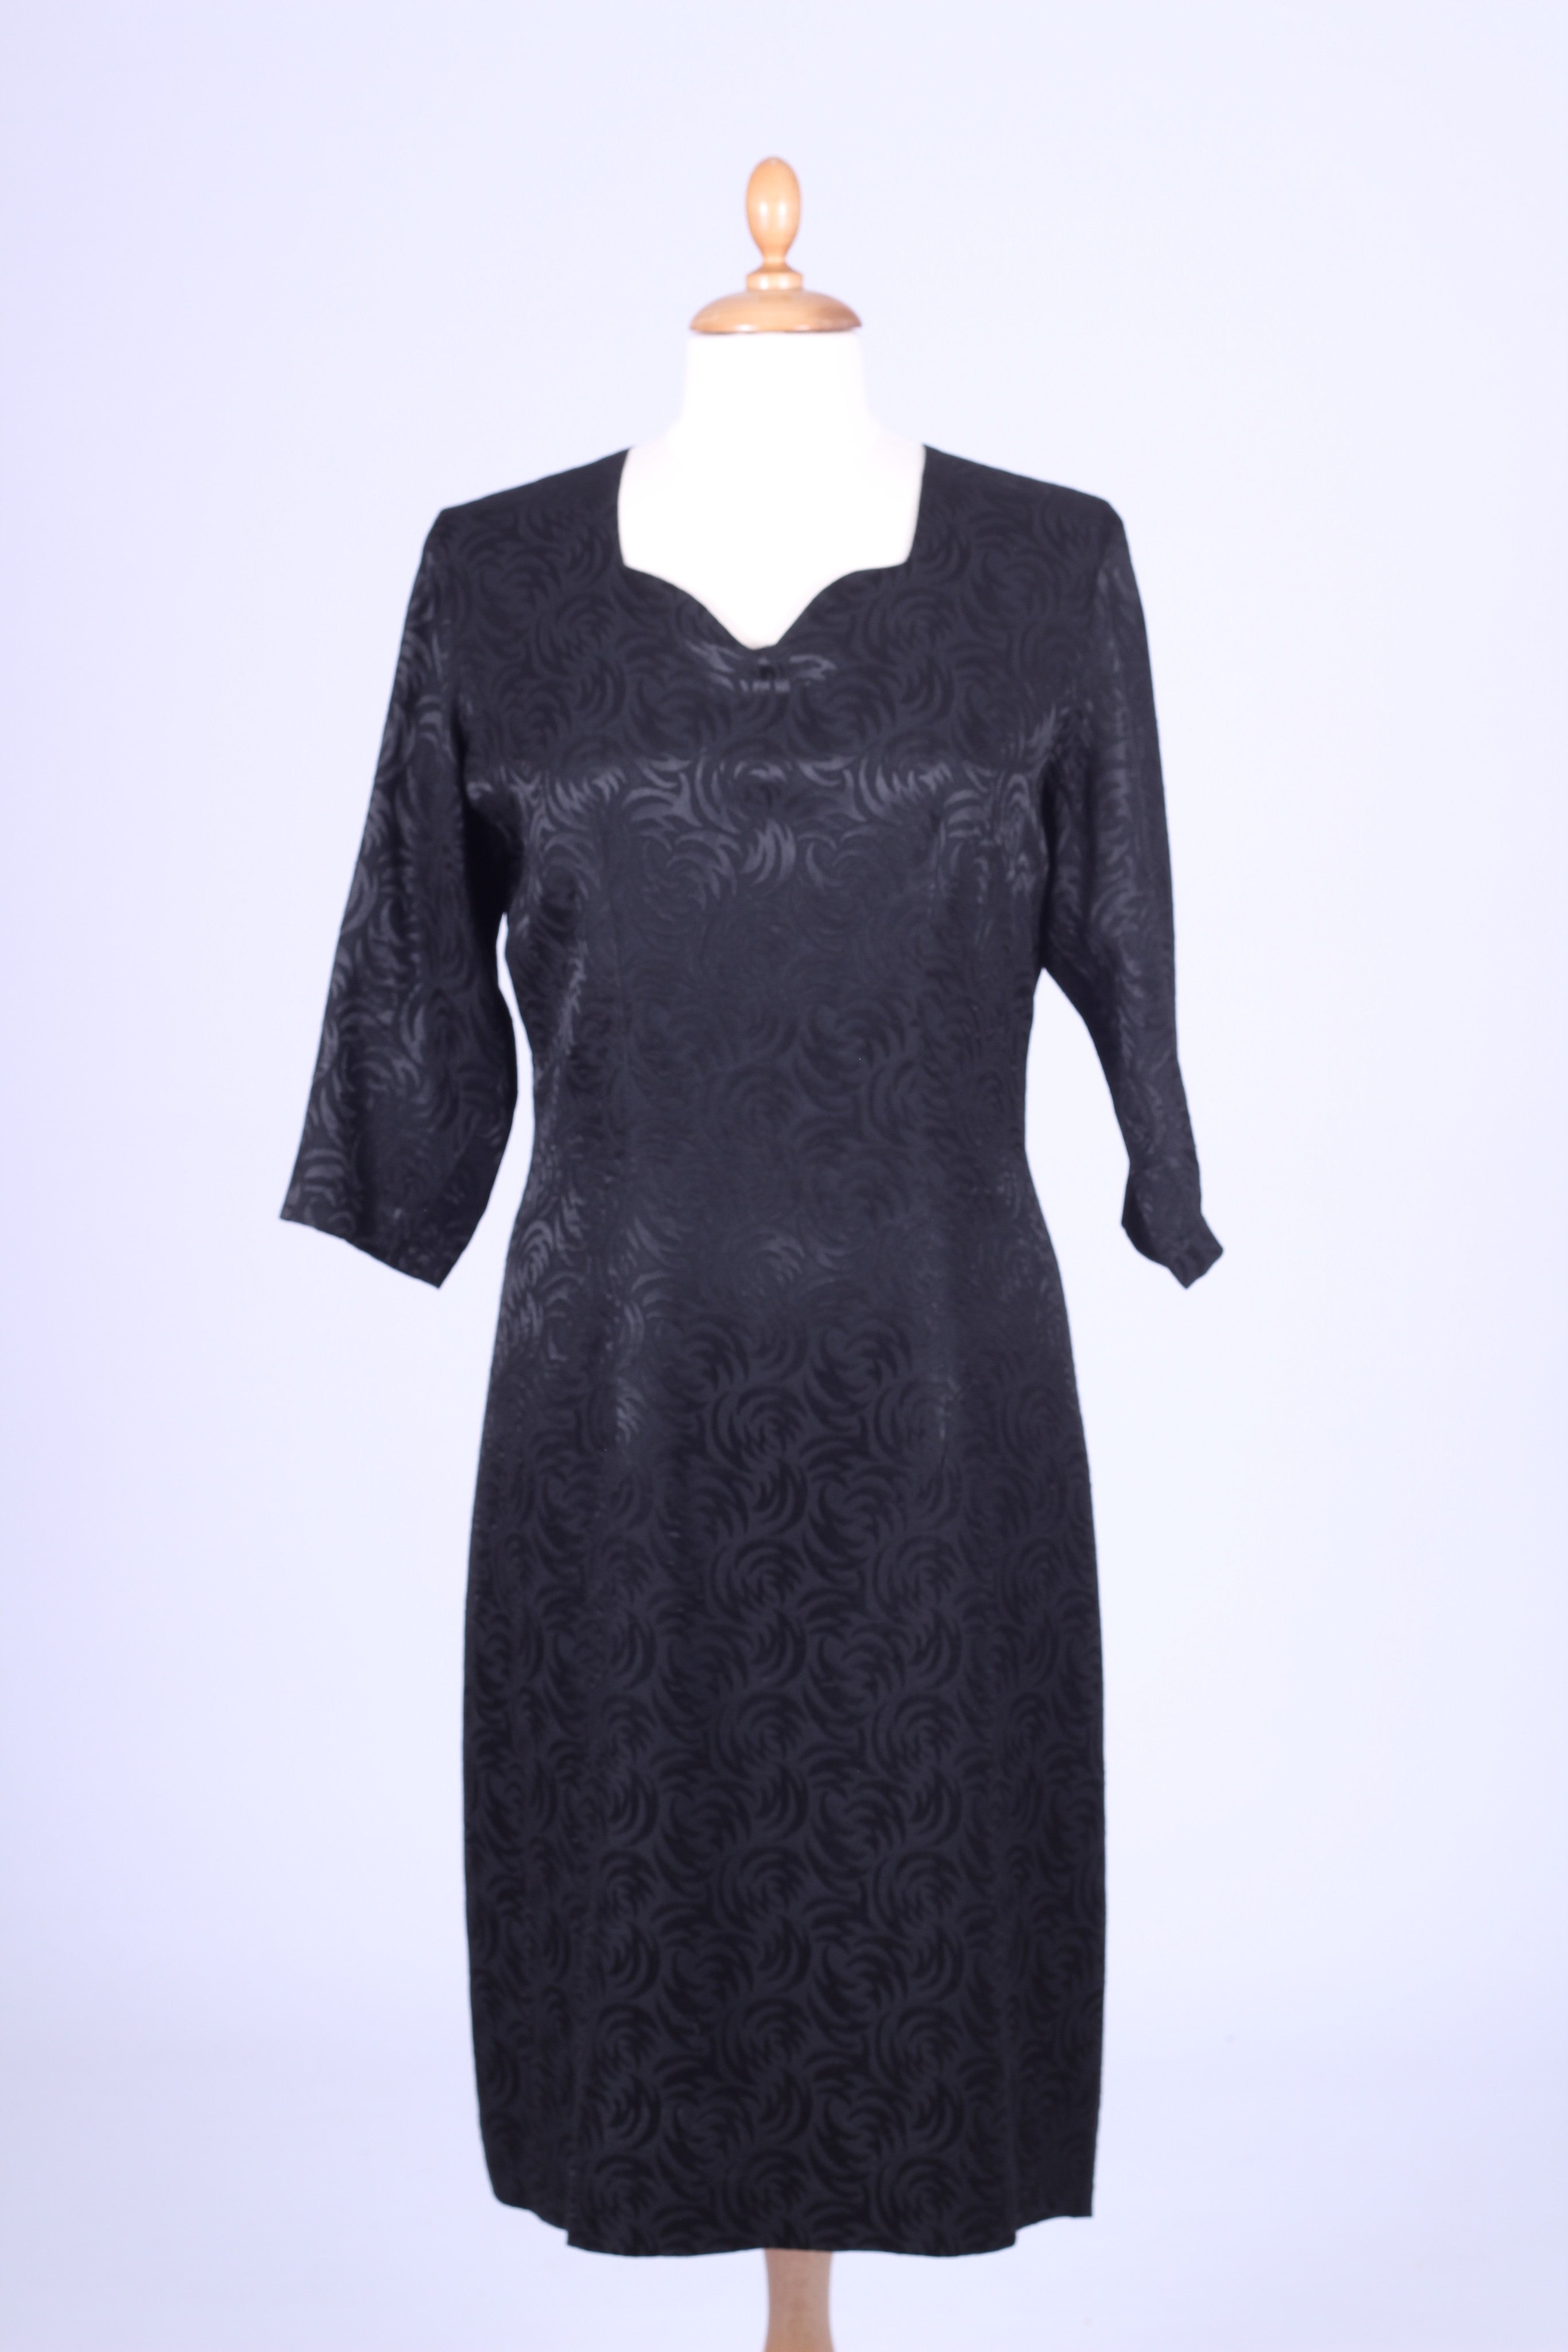 Sort kjole i silkebrokade 1960. XL